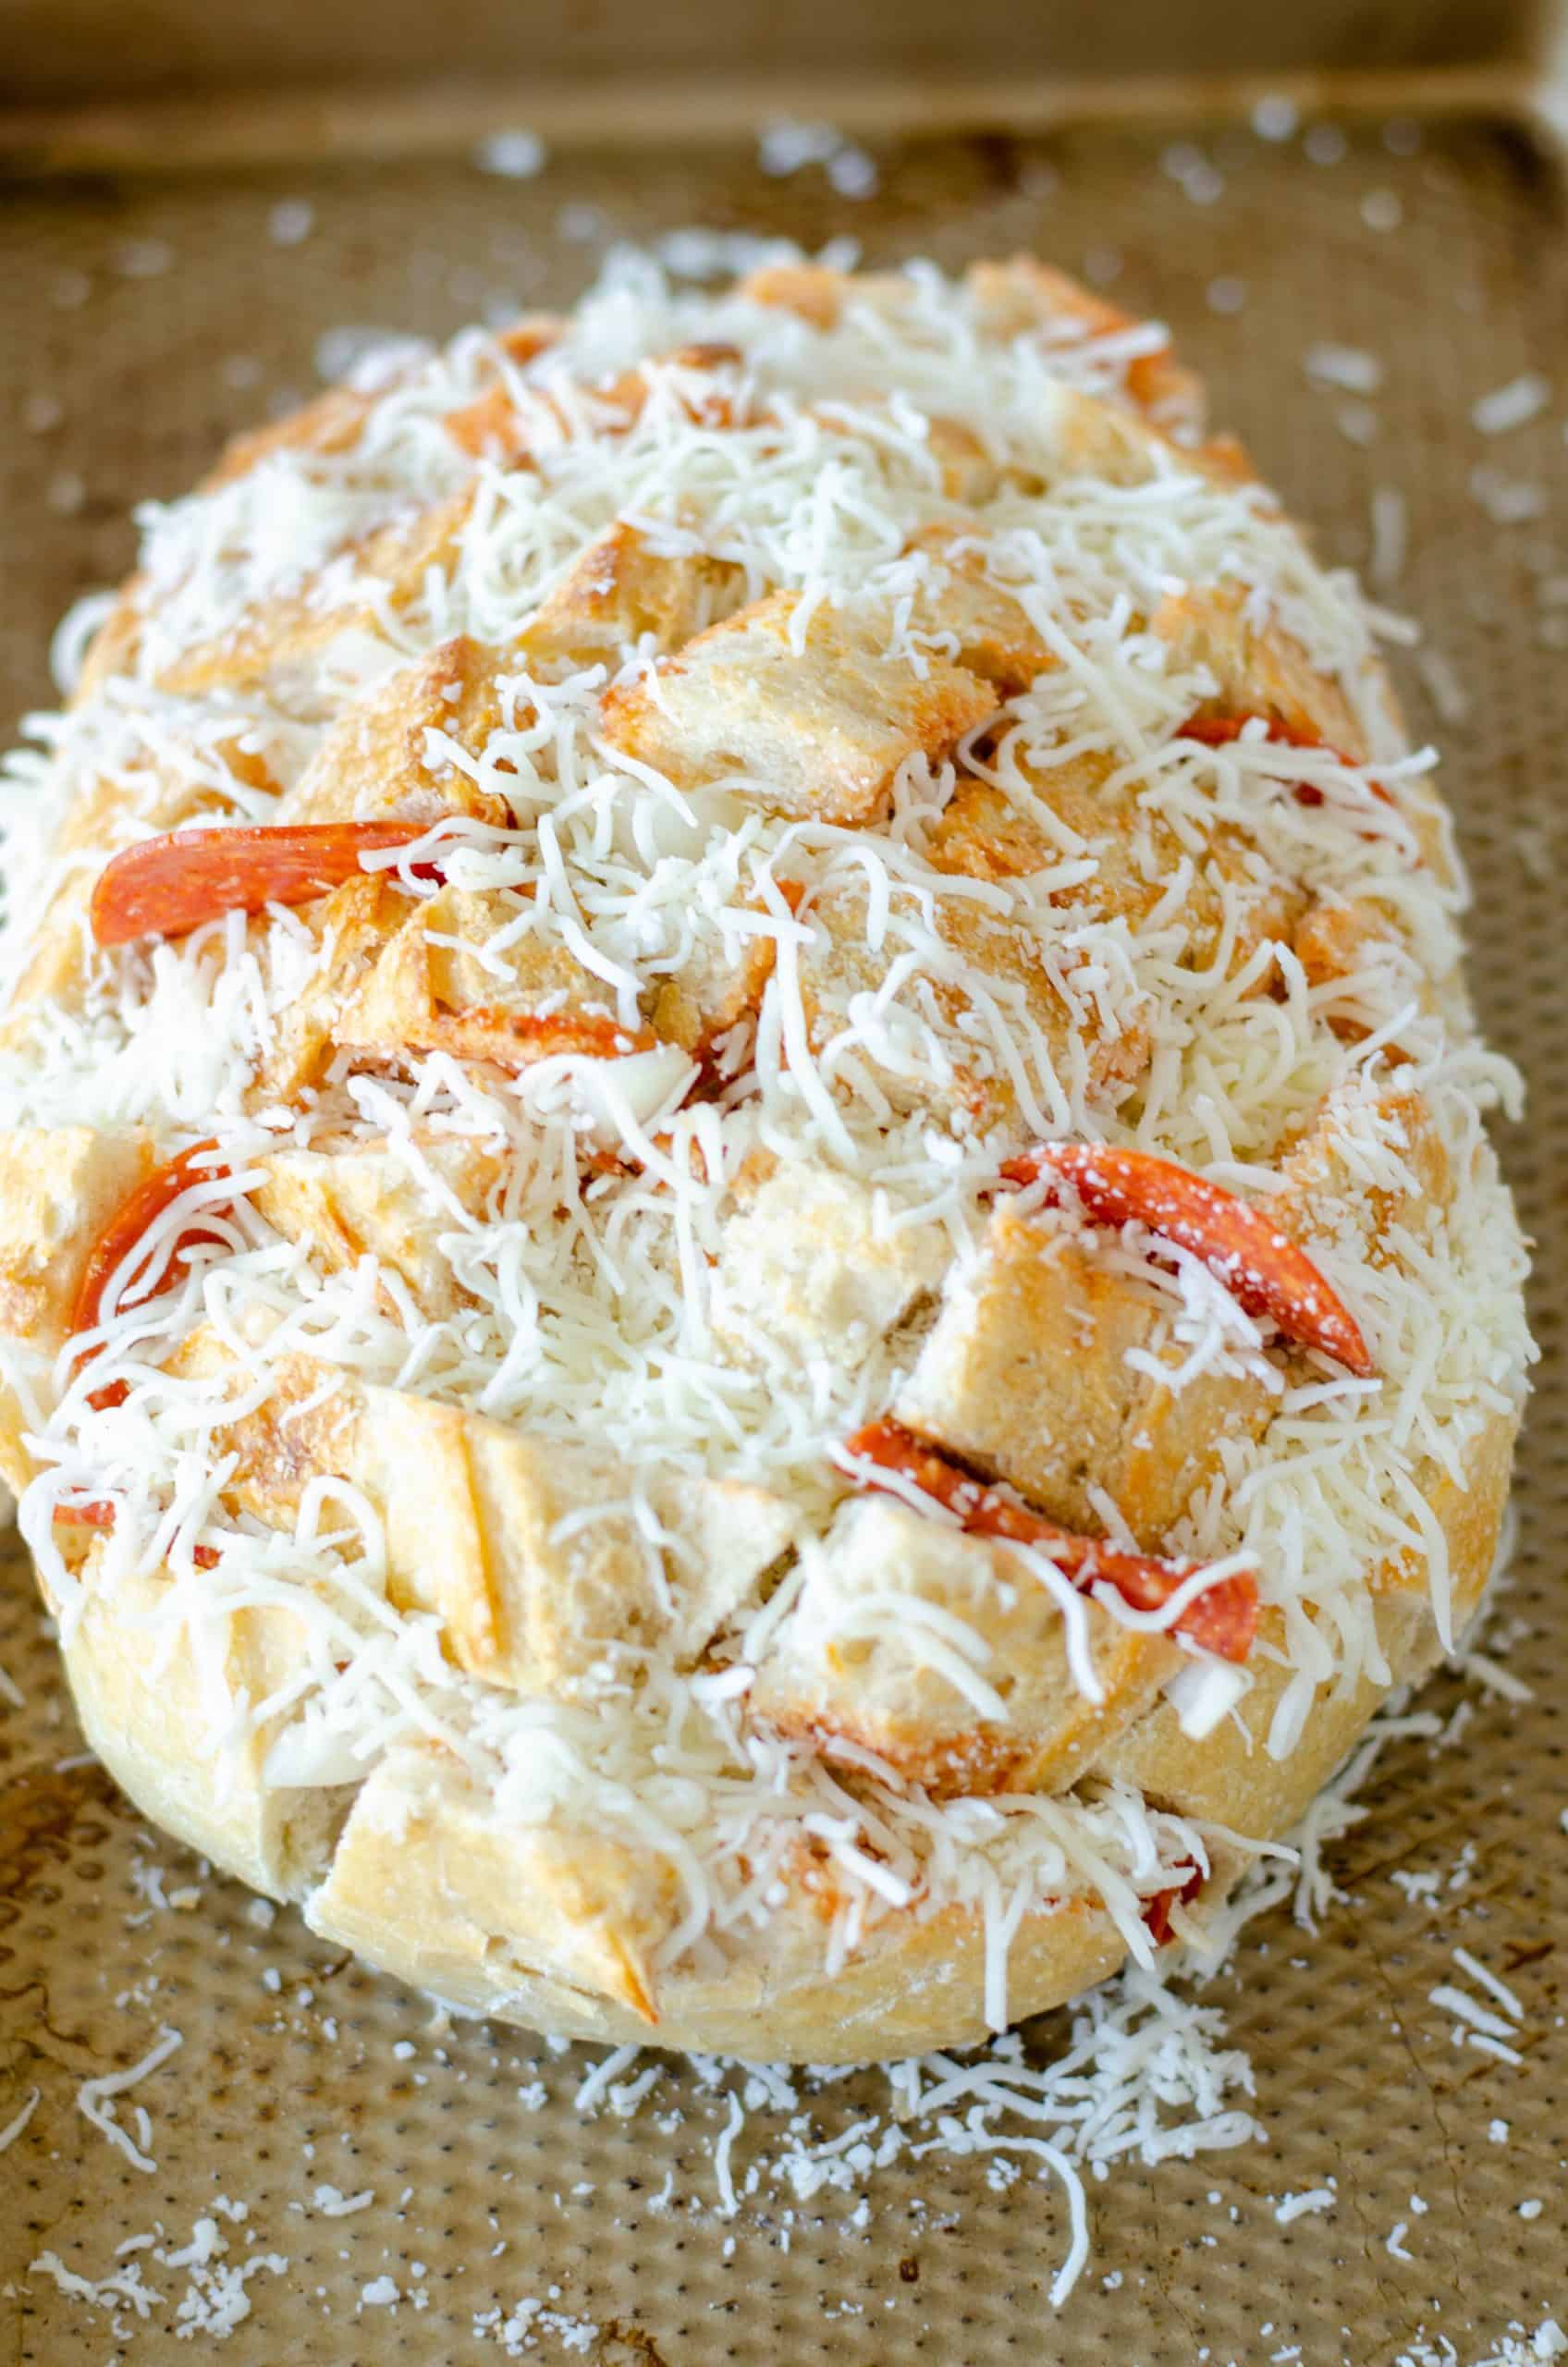 shredded mozzarella cheese stuffed inside sliced sourdough bread on a baking sheet.